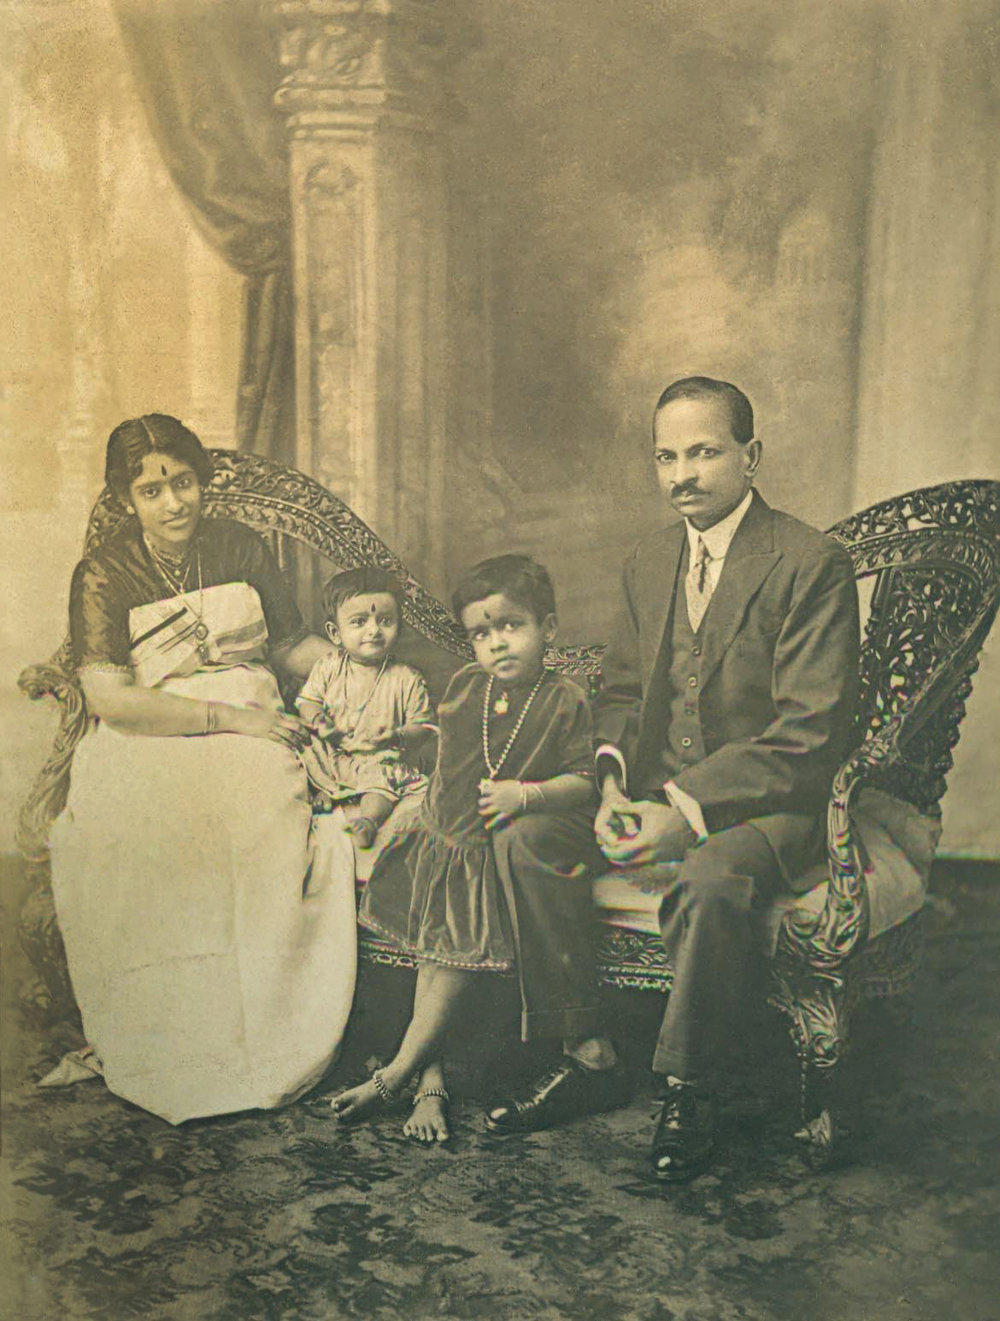 Maharani with her consort, Rama Varma, and her daughters, Princesses Lalitamba and Indira Image credit: Jay Gopal Varma, Travancore royal family